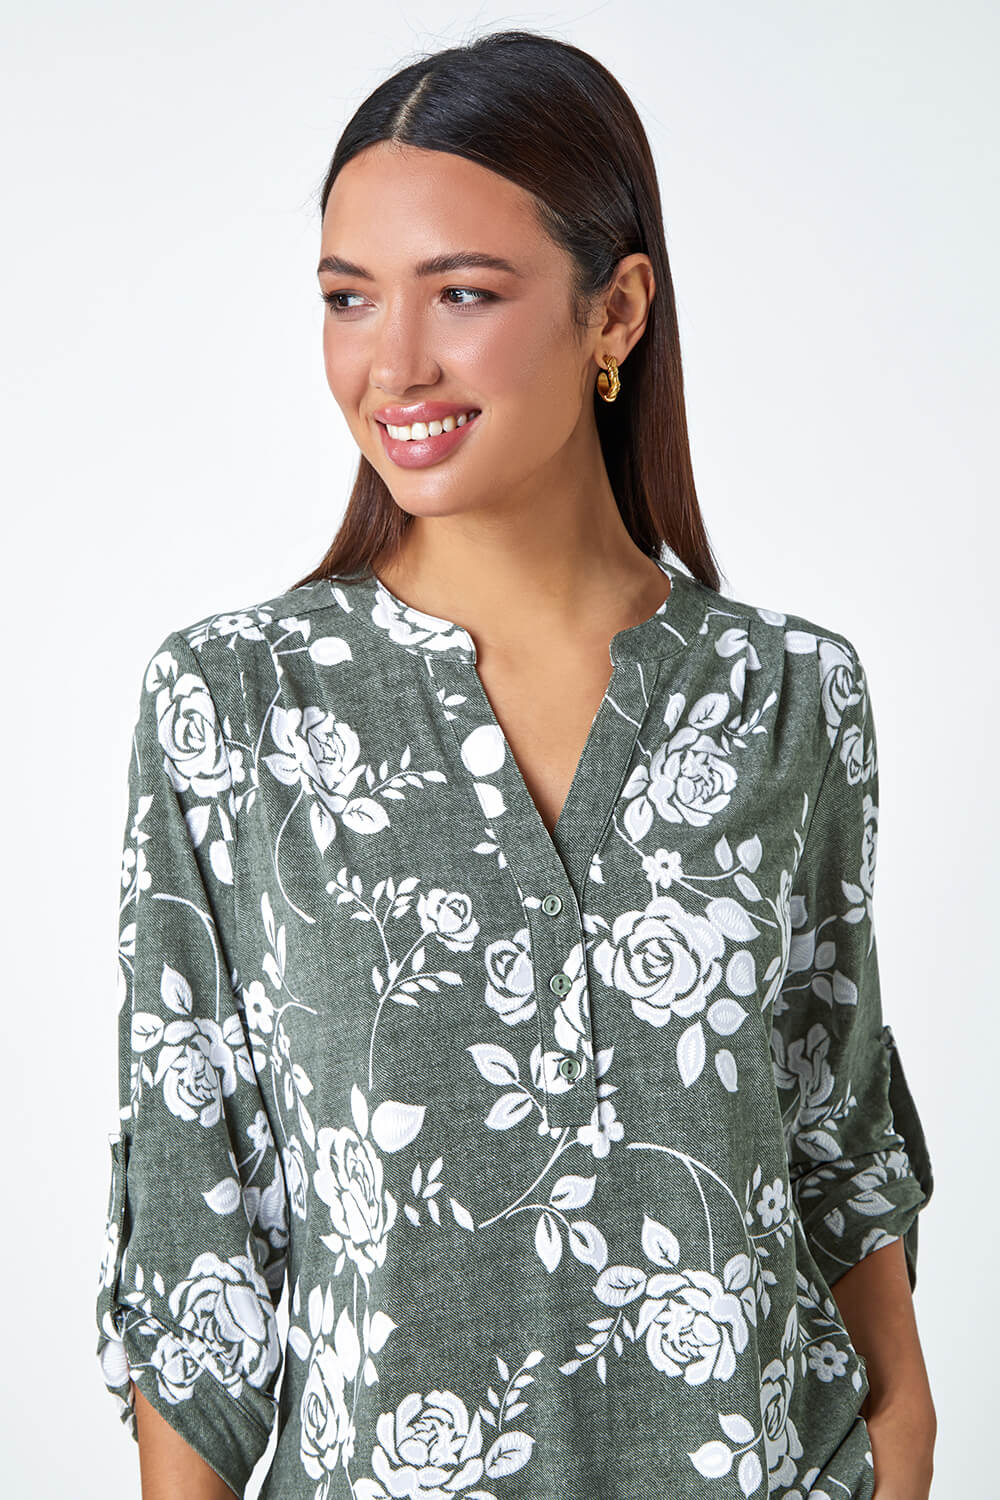 KHAKI Textured Floral Print Stretch Shirt, Image 4 of 5